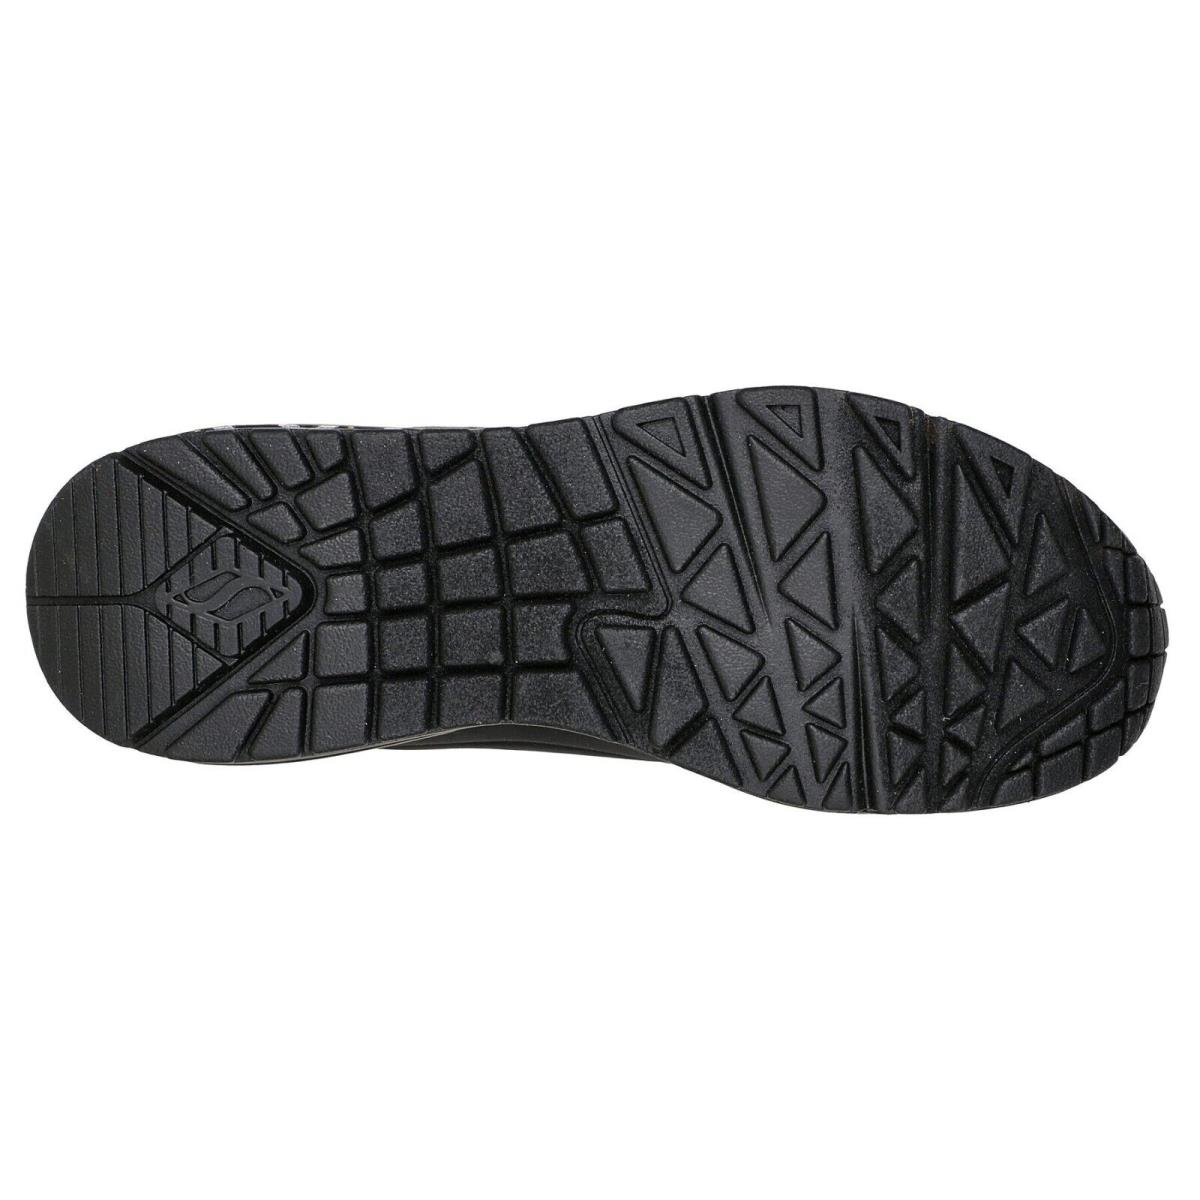 Skechers shoes Uno Metallic Love - Black/Gold 2